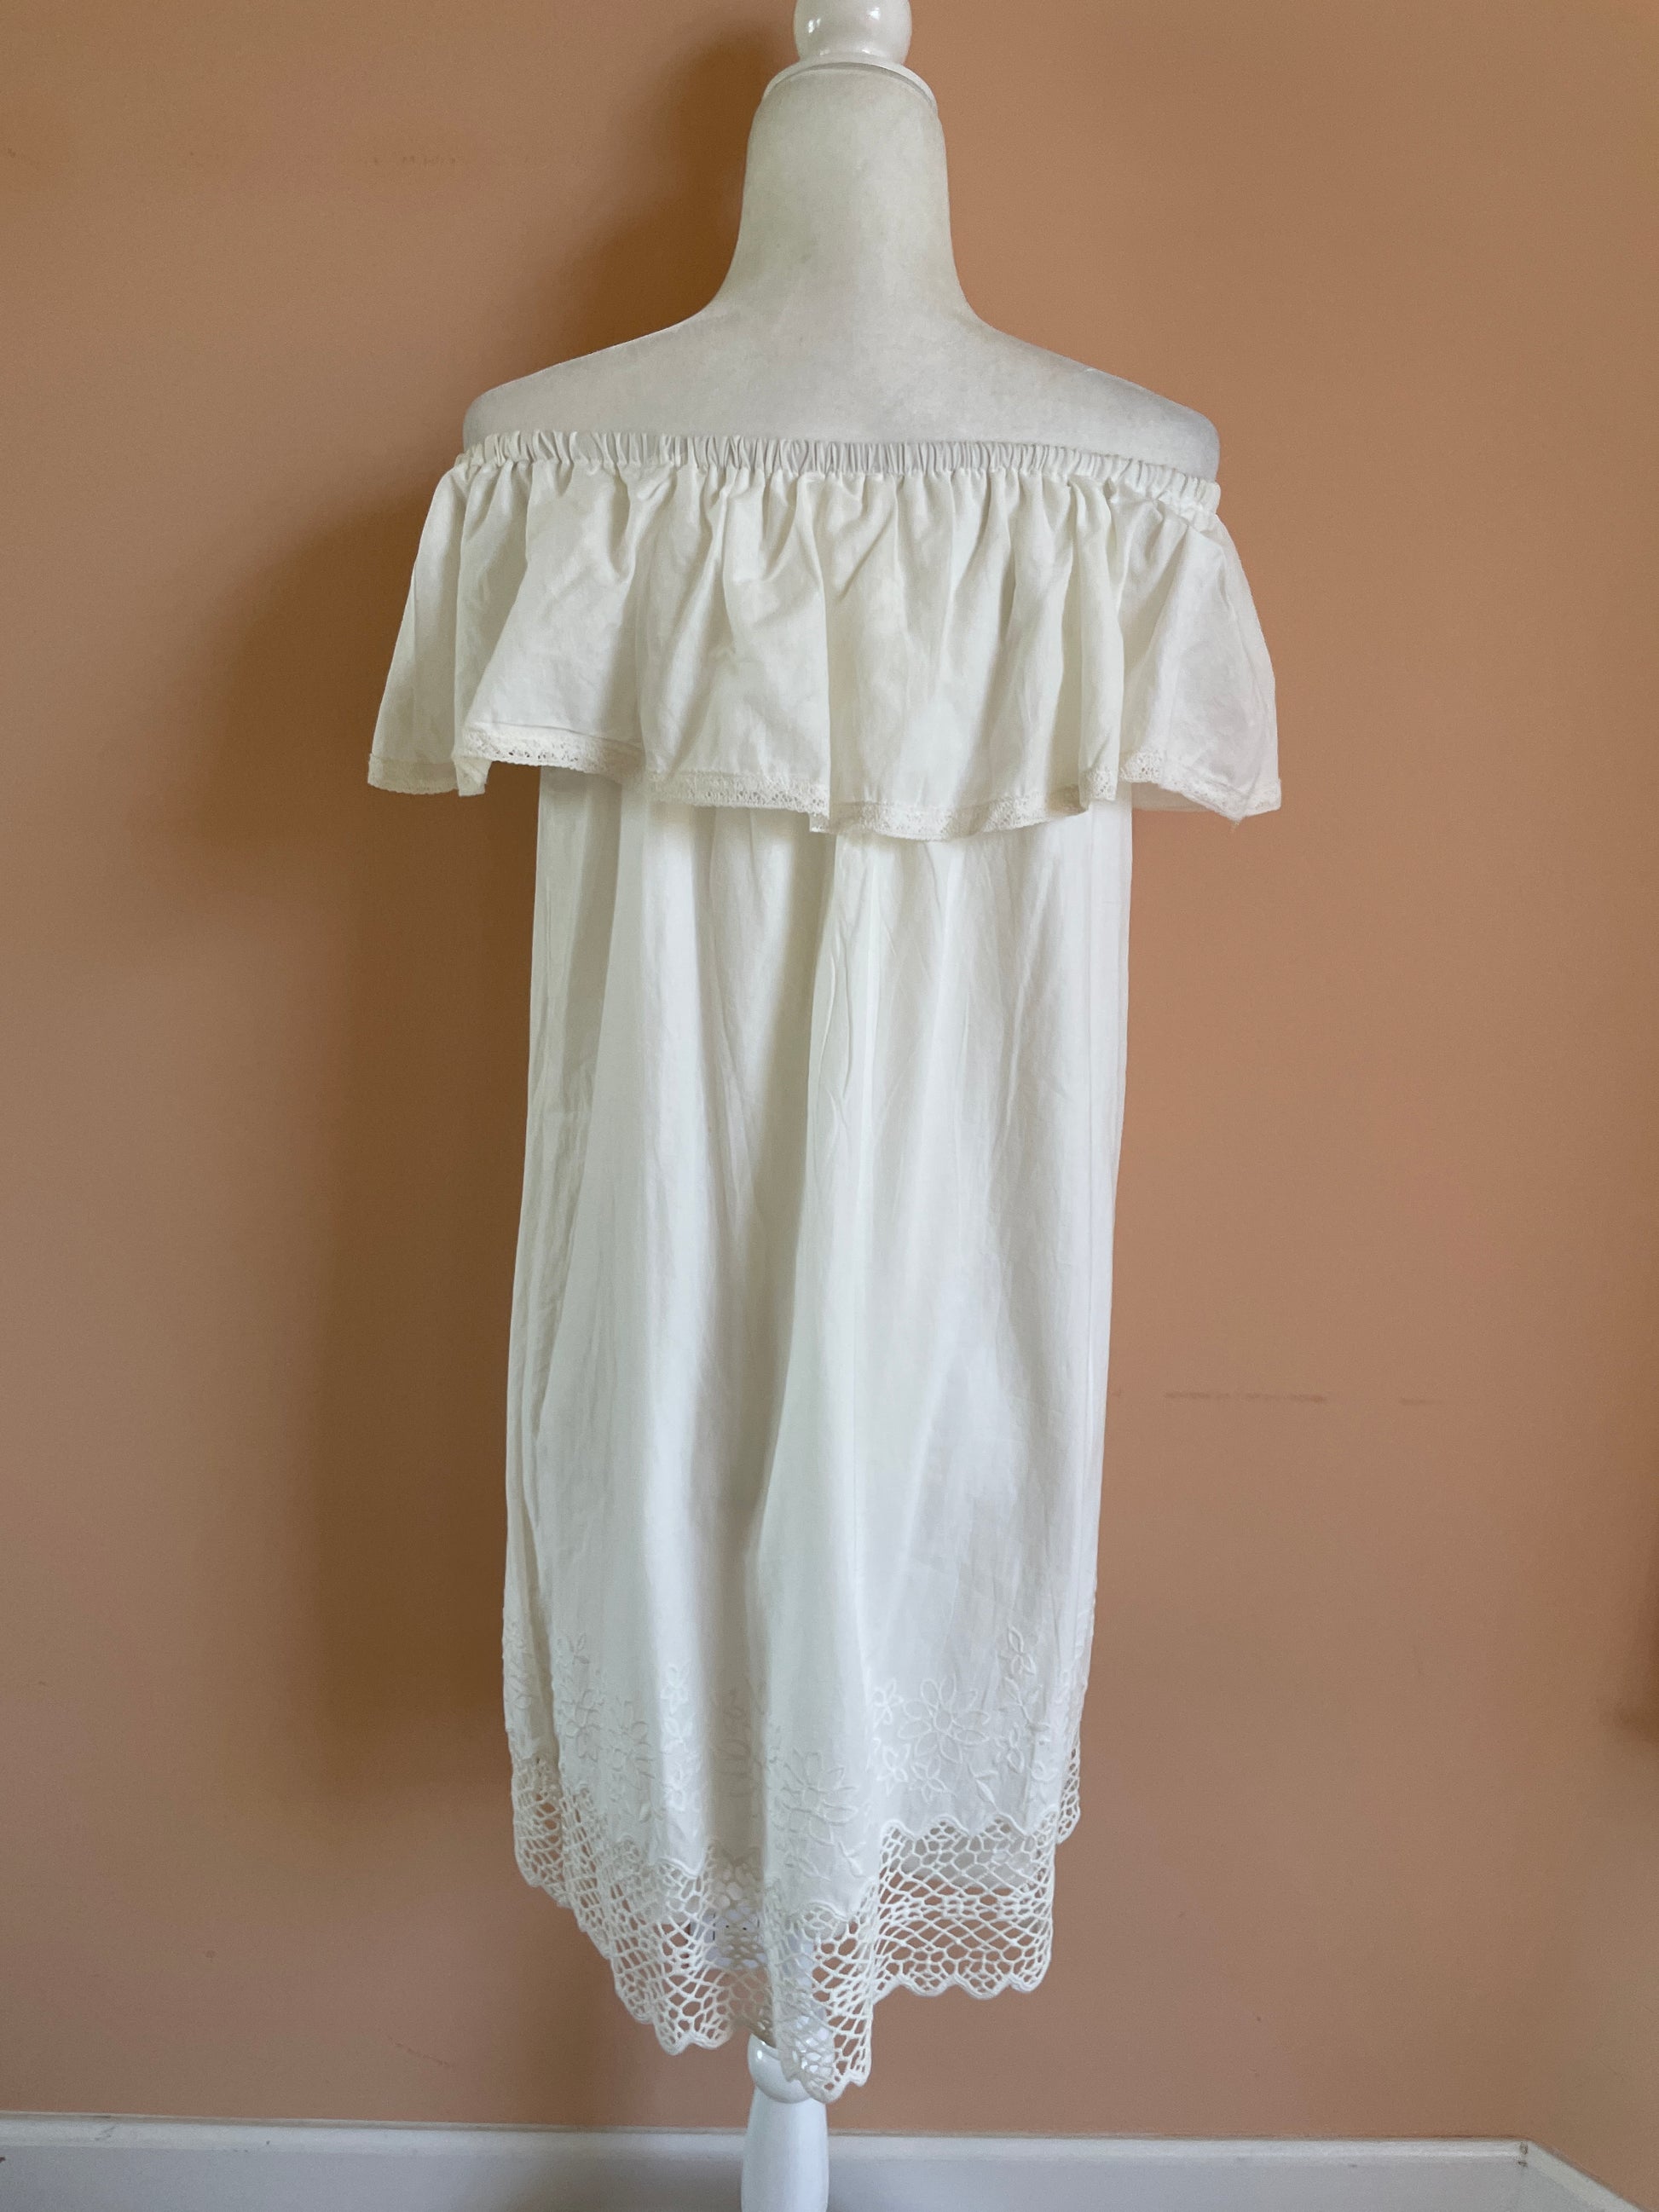  2000s White Cotton Off On Shoulder Sleeveless Summer Dress M